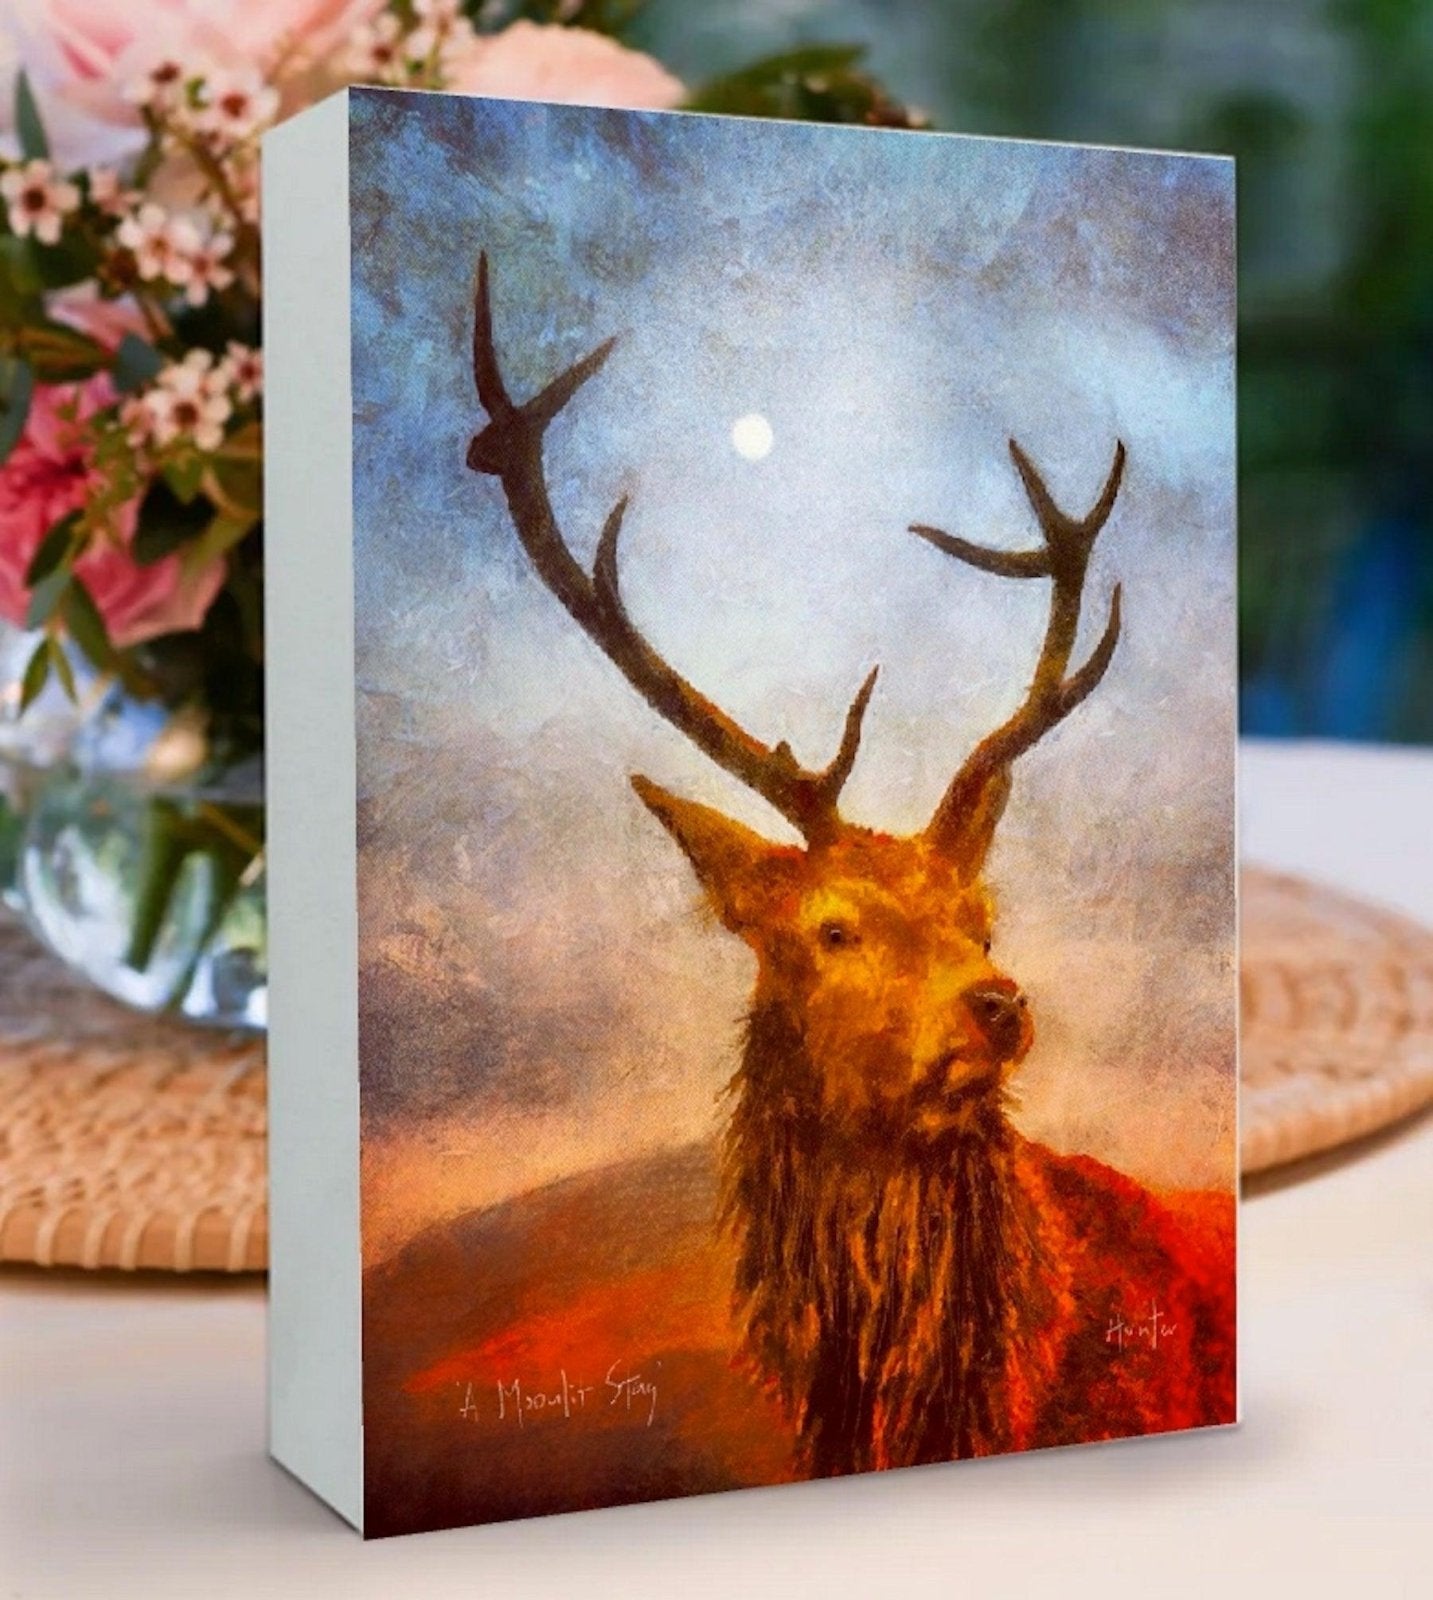 A Brooding Sligachan Skye Wooden Art Block-Wooden Art Blocks-Skye Art Gallery-Paintings, Prints, Homeware, Art Gifts From Scotland By Scottish Artist Kevin Hunter